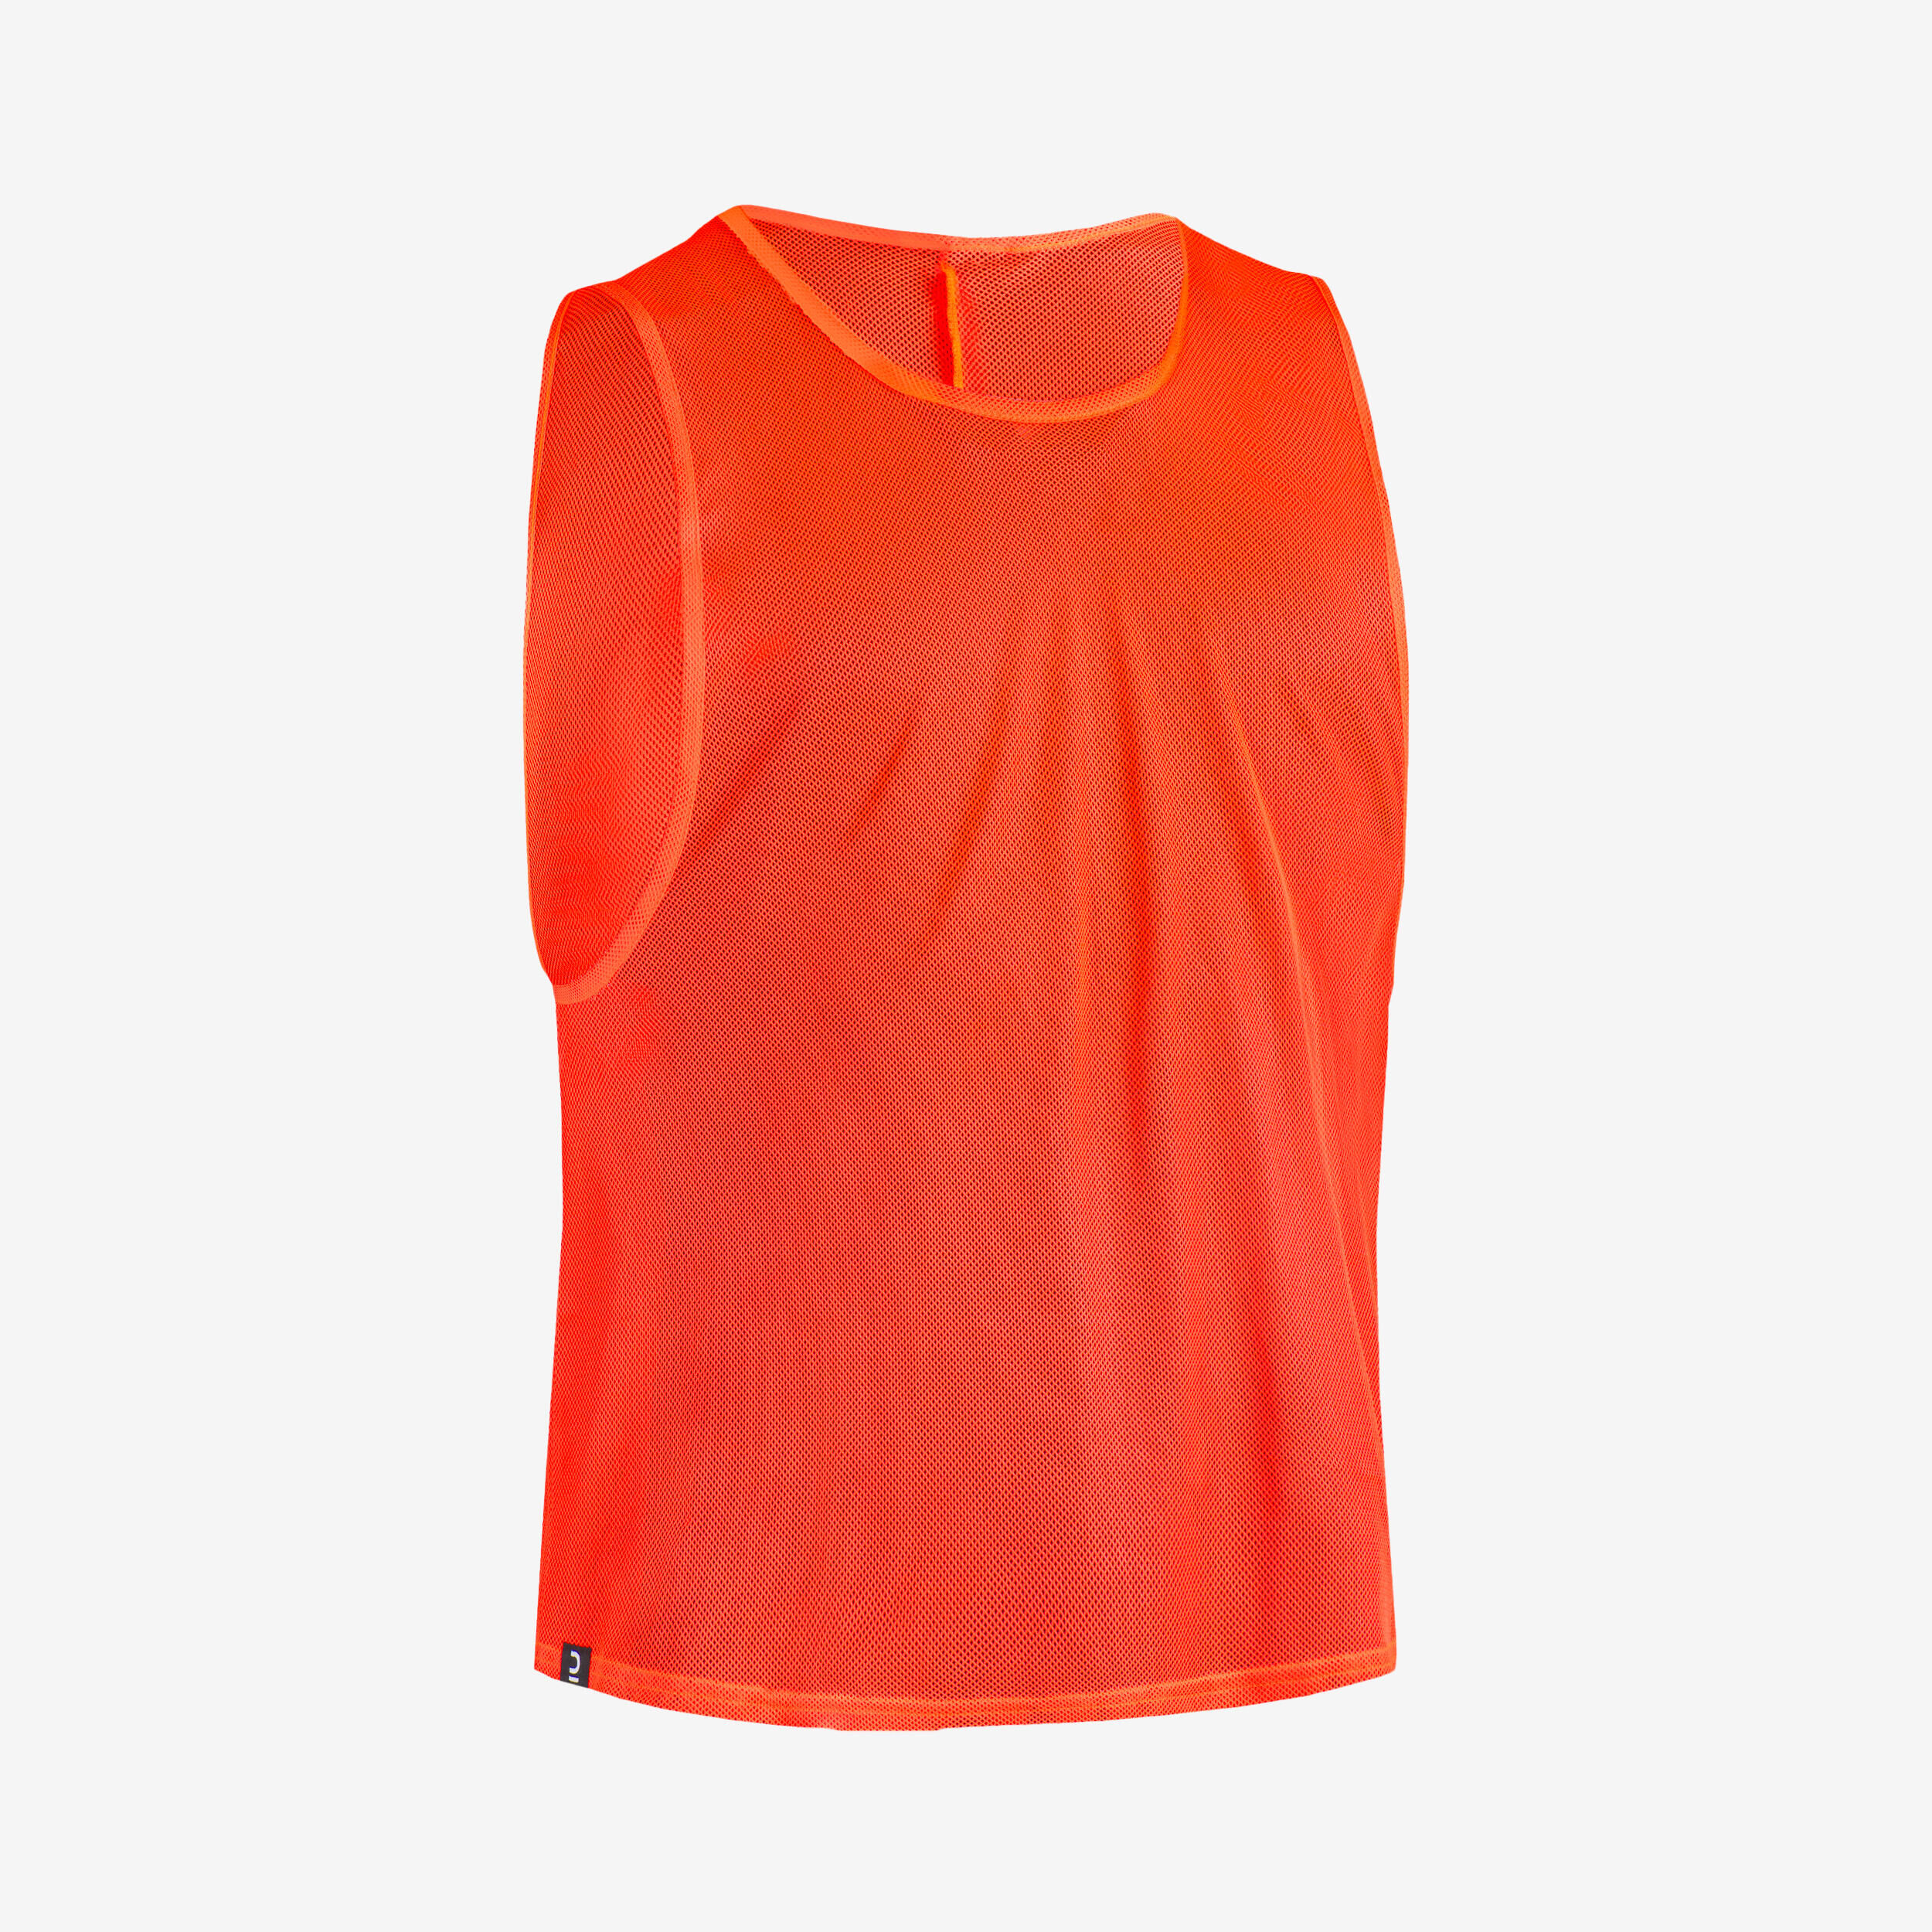 KIPSTA Sports Bib Adult - Neon Orange